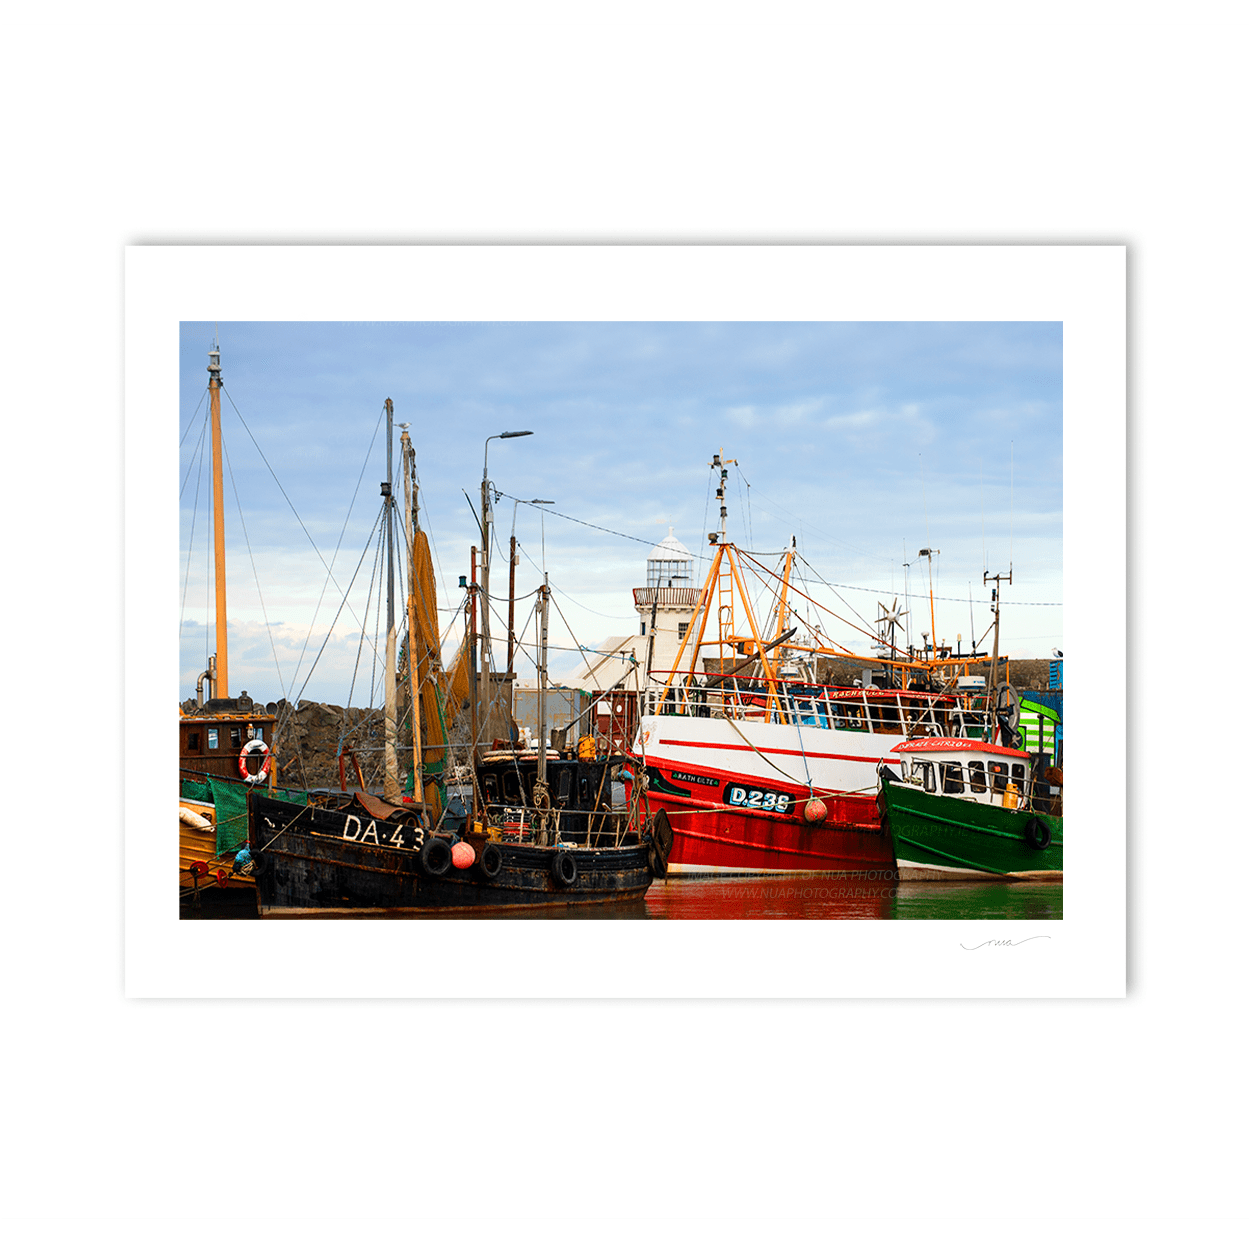 Nua Photography Print Balbriggan Harbour boats